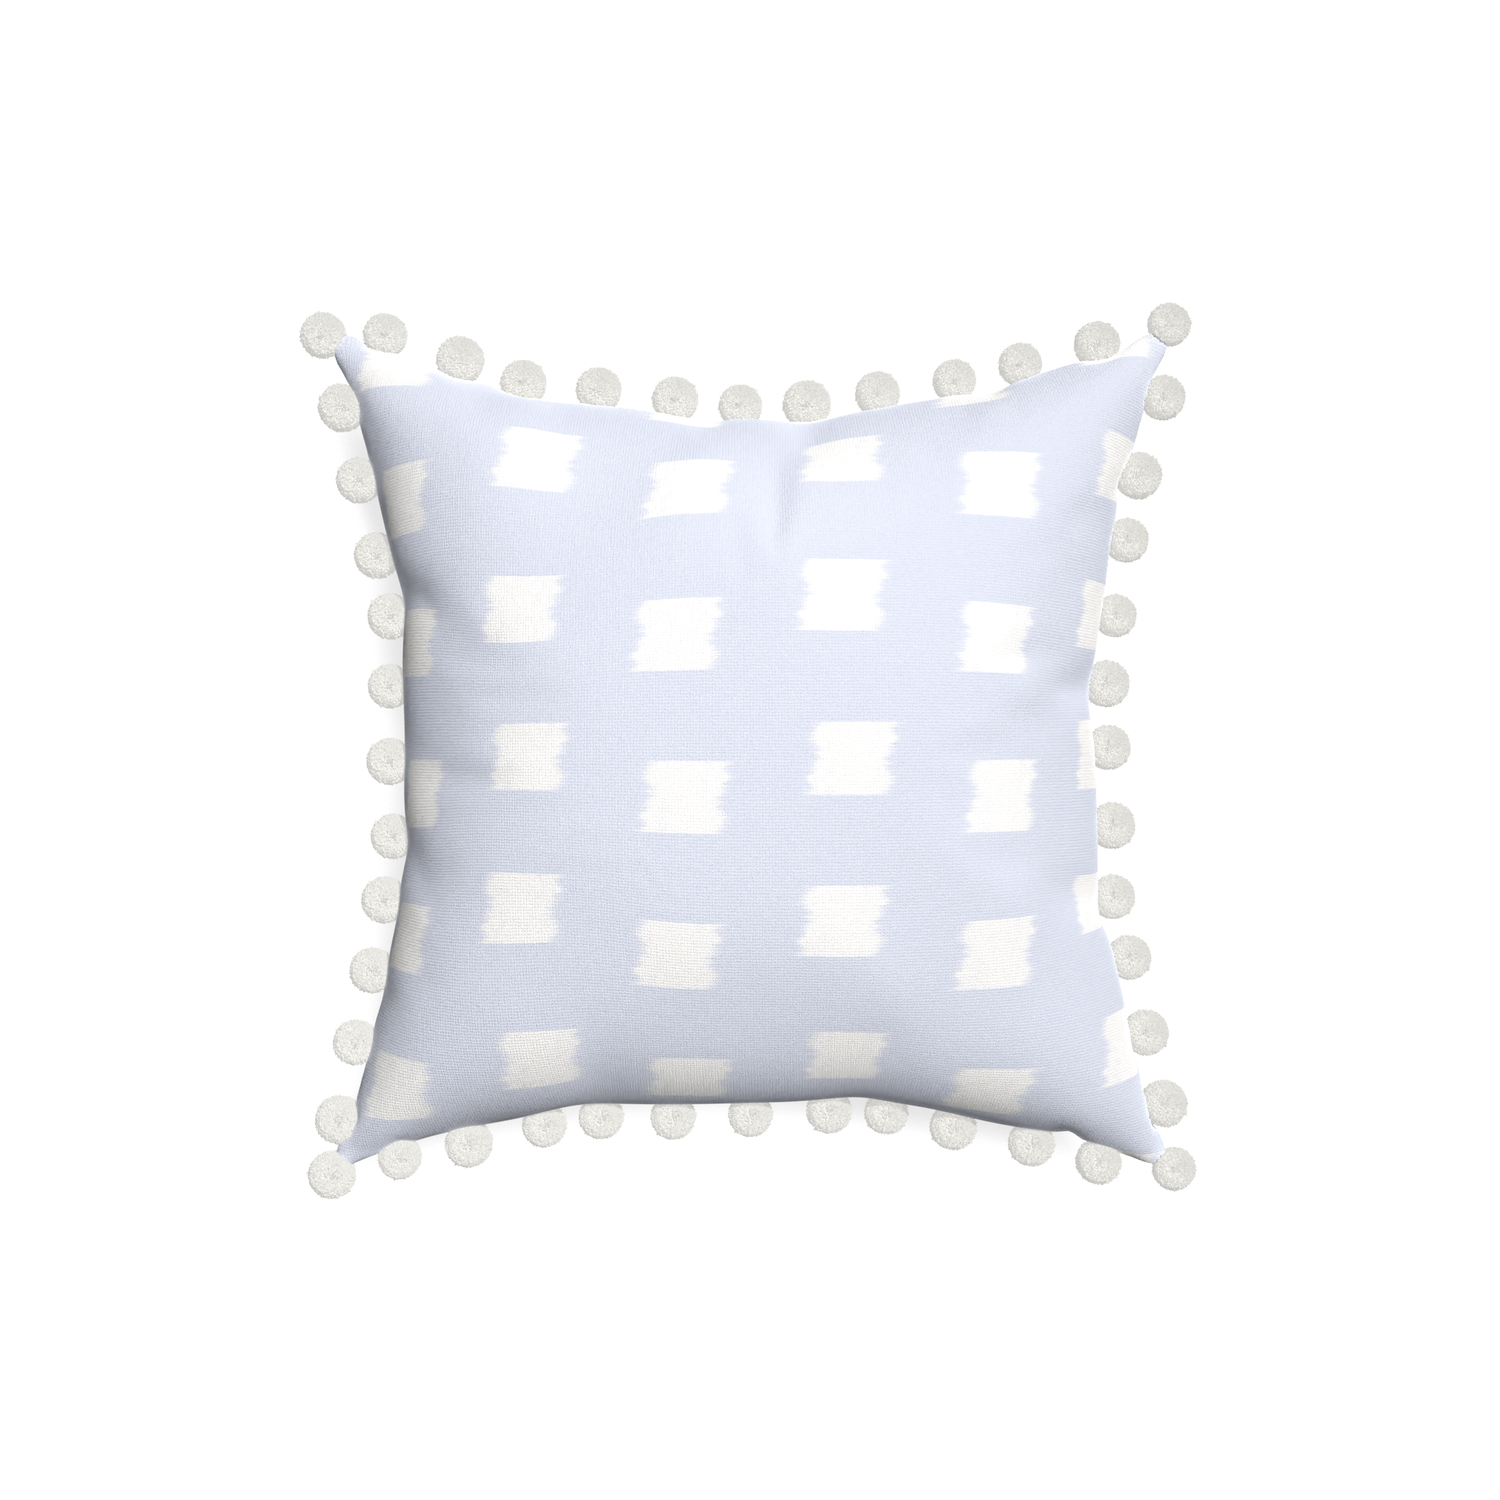 18-square denton custom sky blue patternpillow with snow pom pom on white background